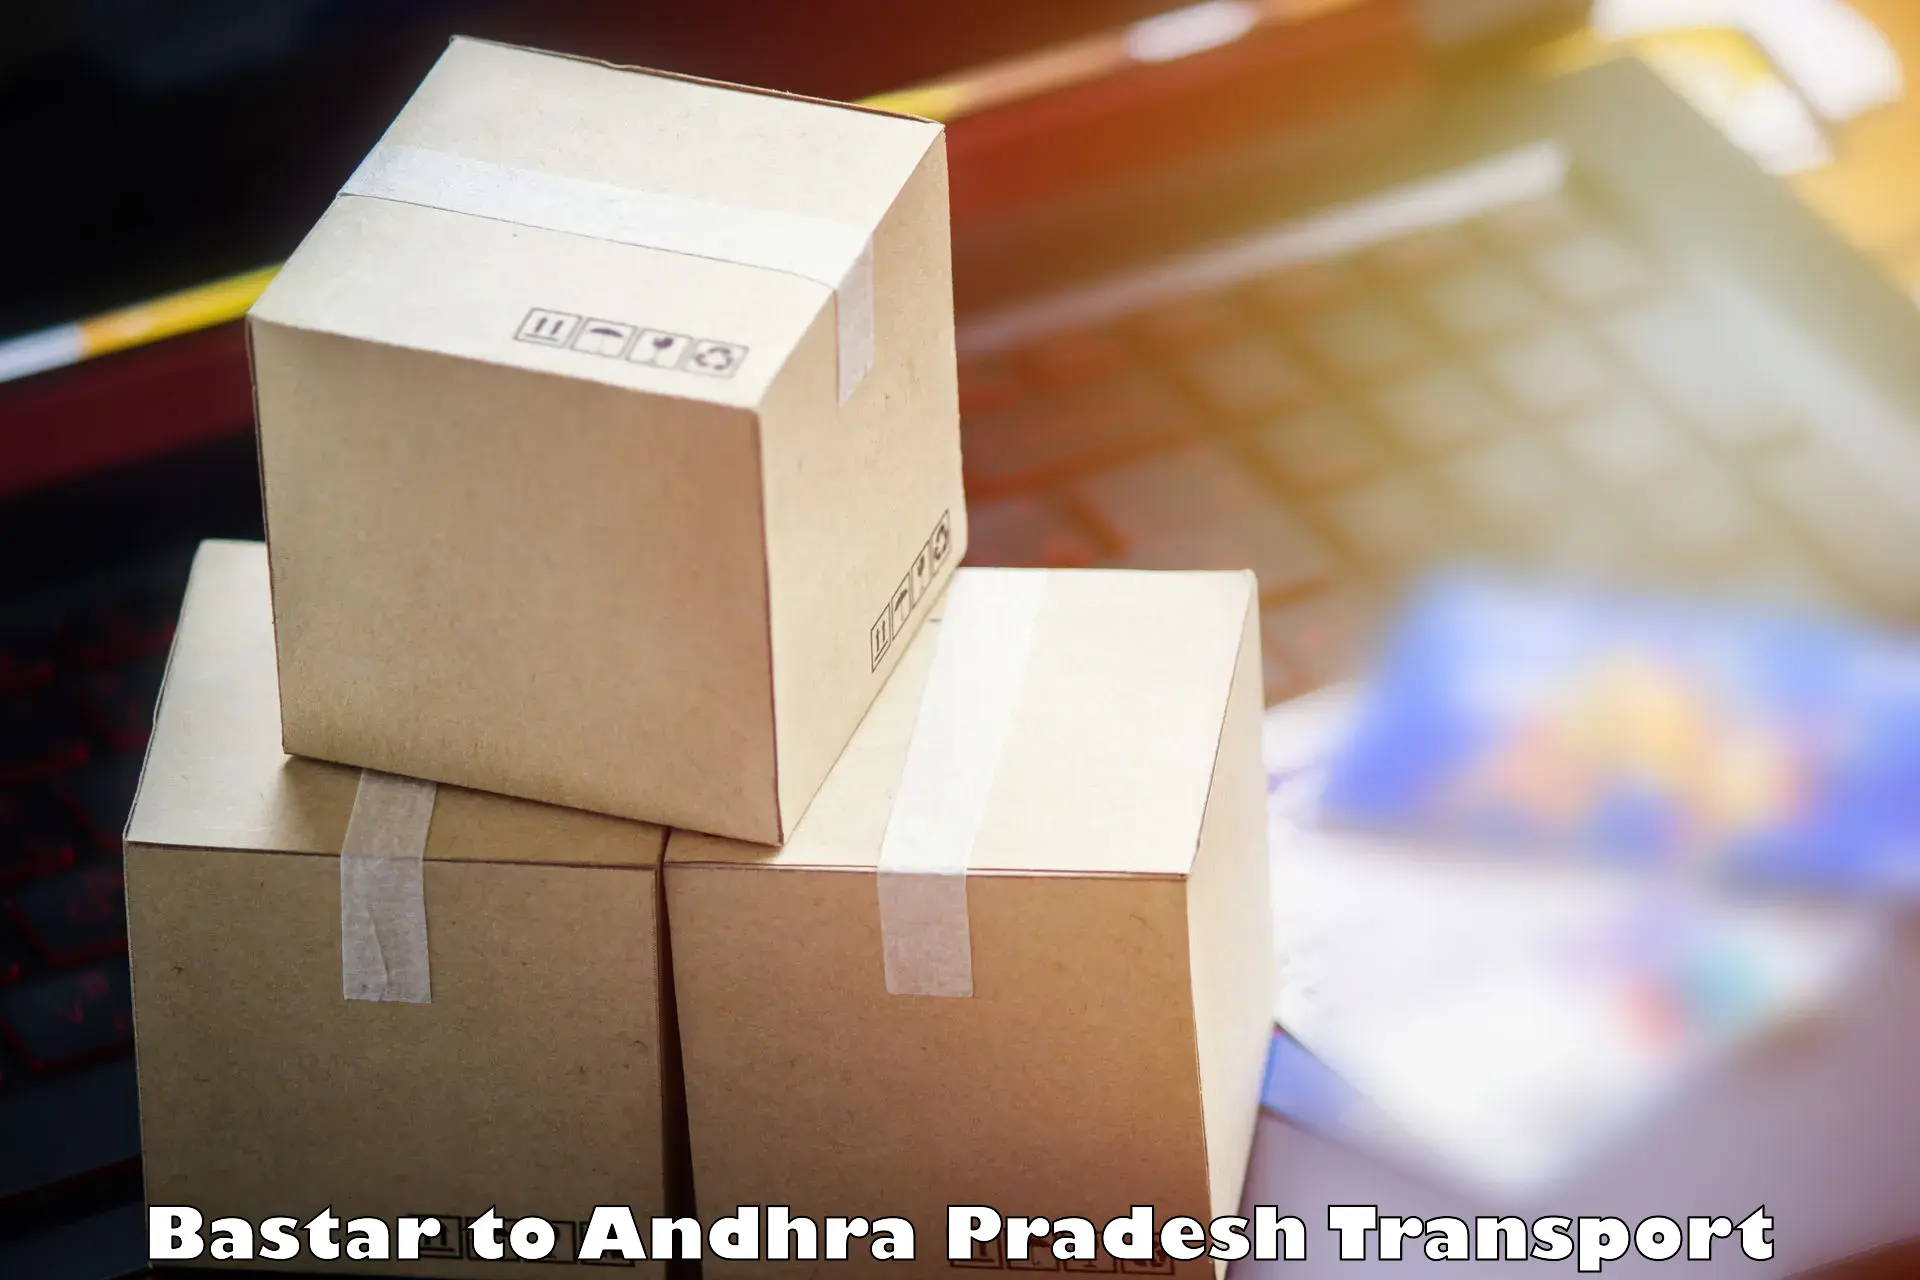 Furniture transport service Bastar to Vijayawada